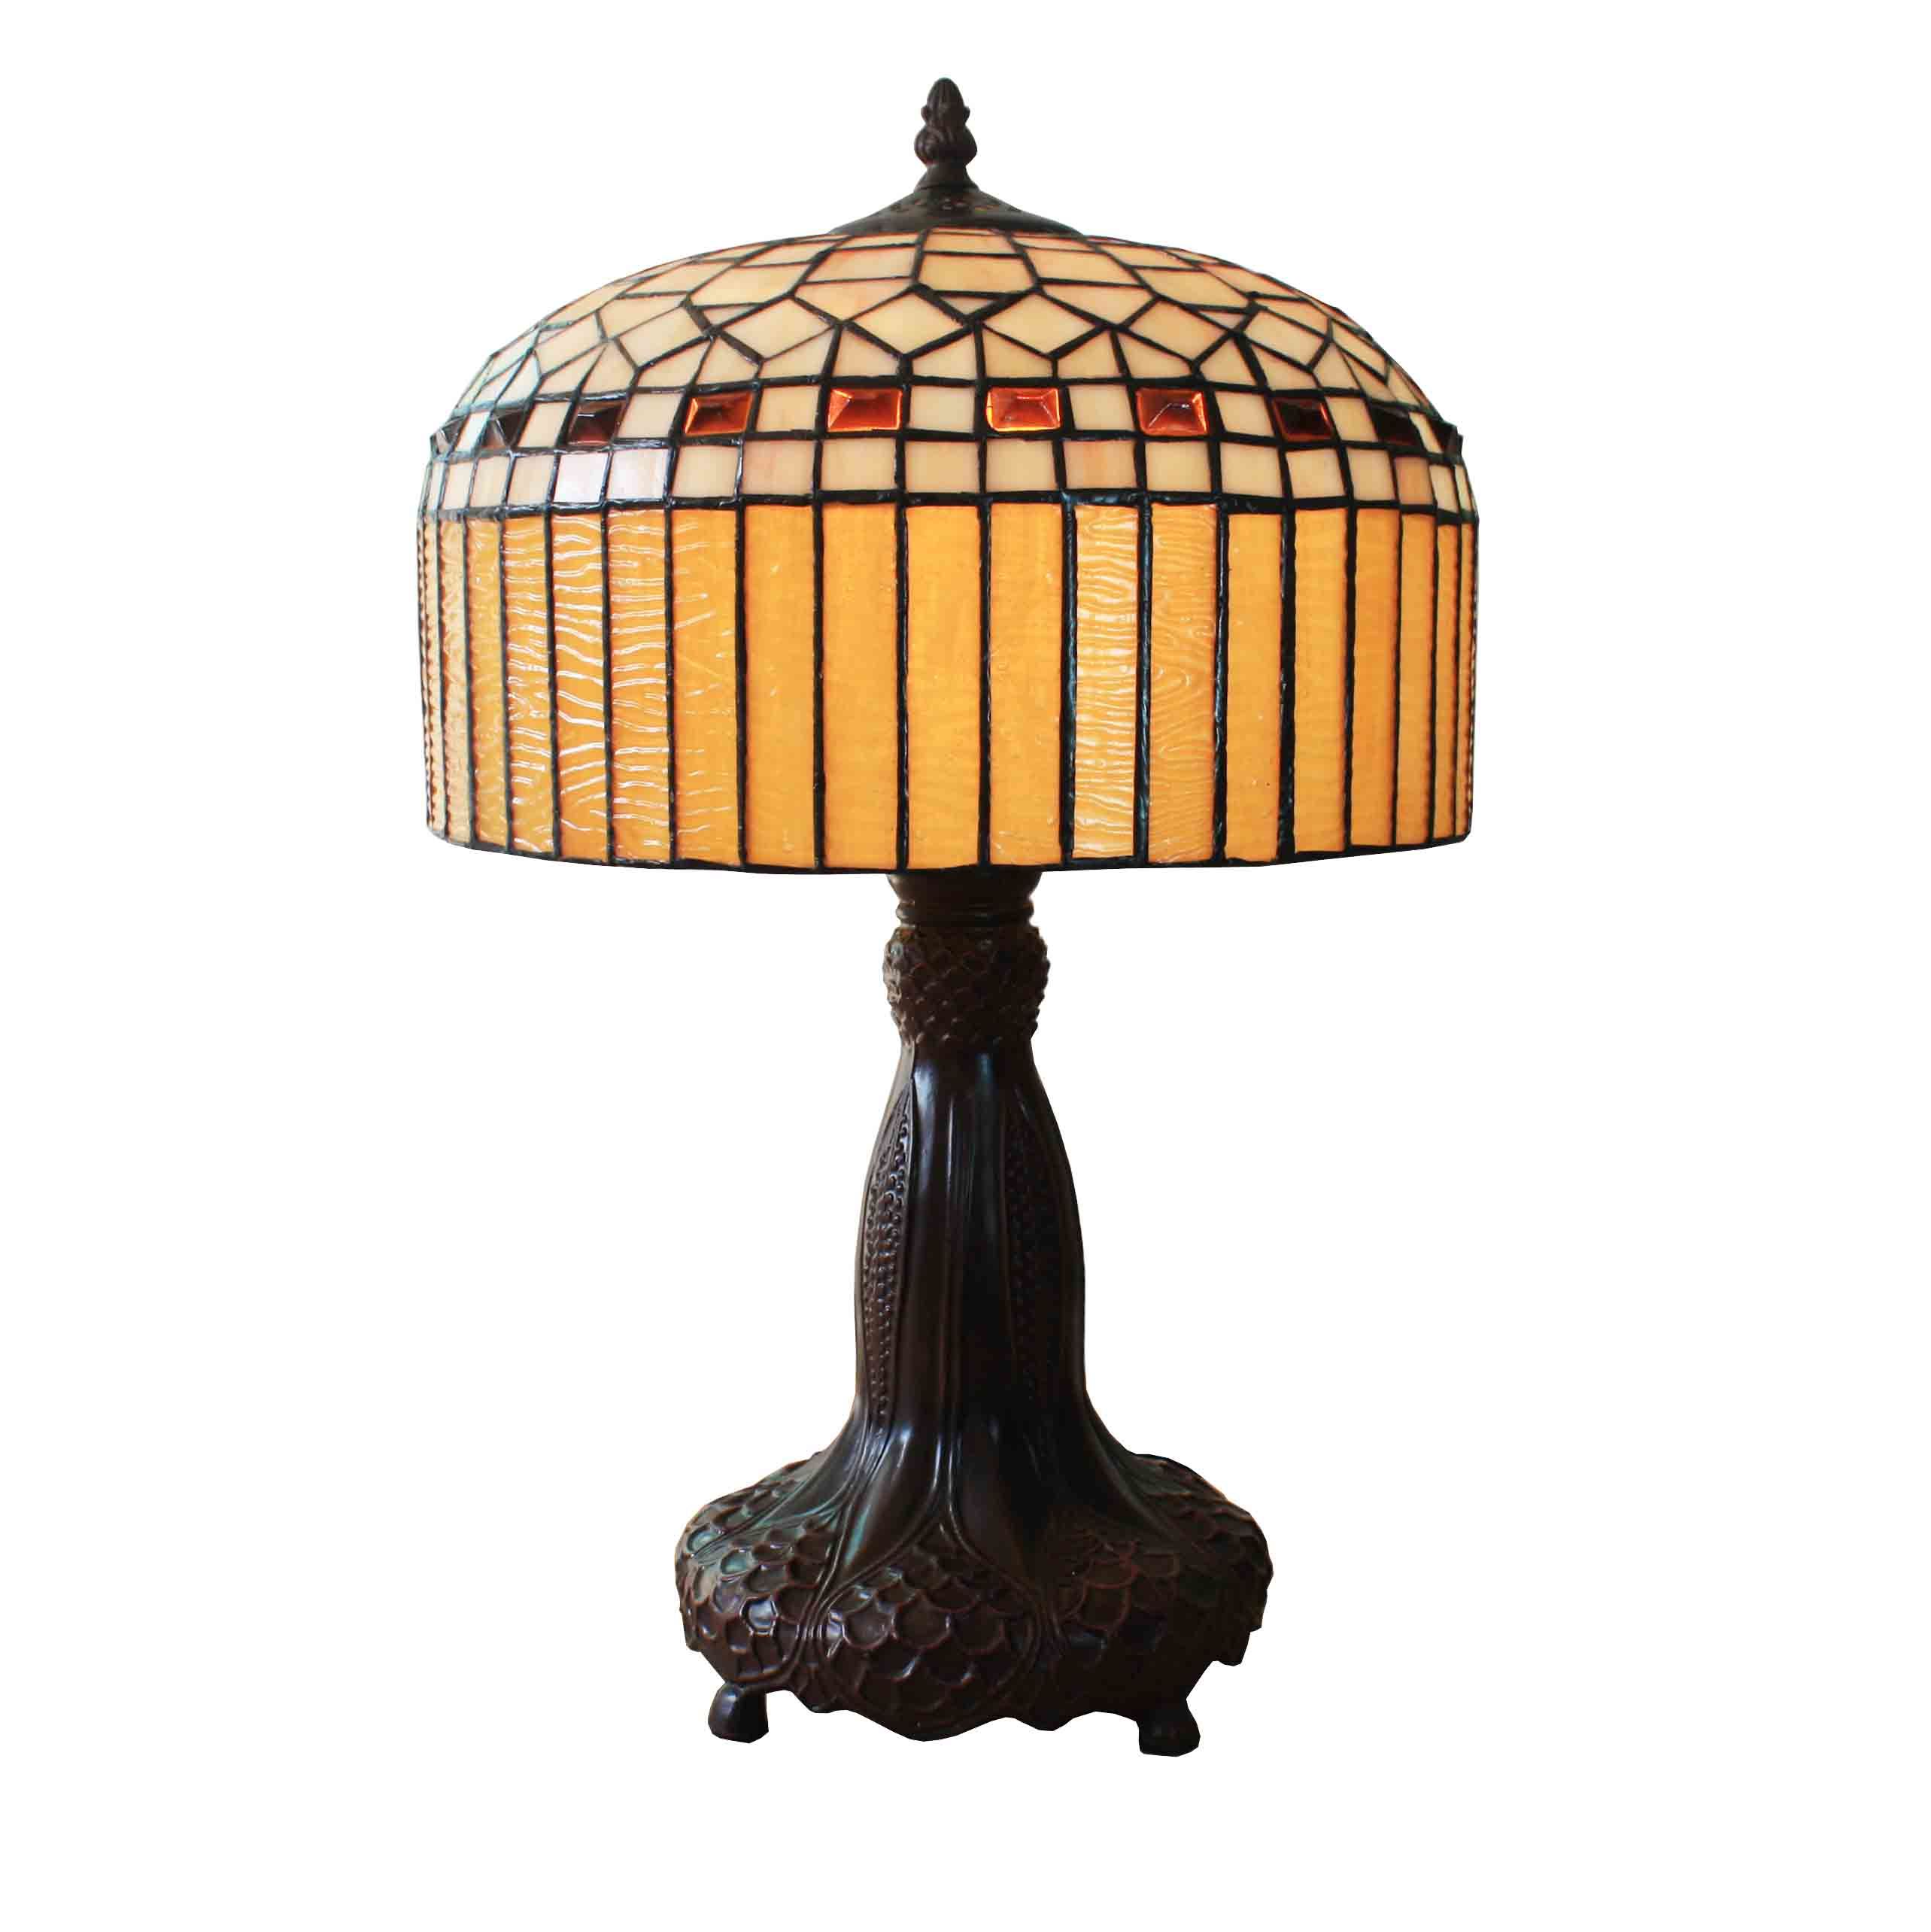 Tiffany Art Table Lamp 611